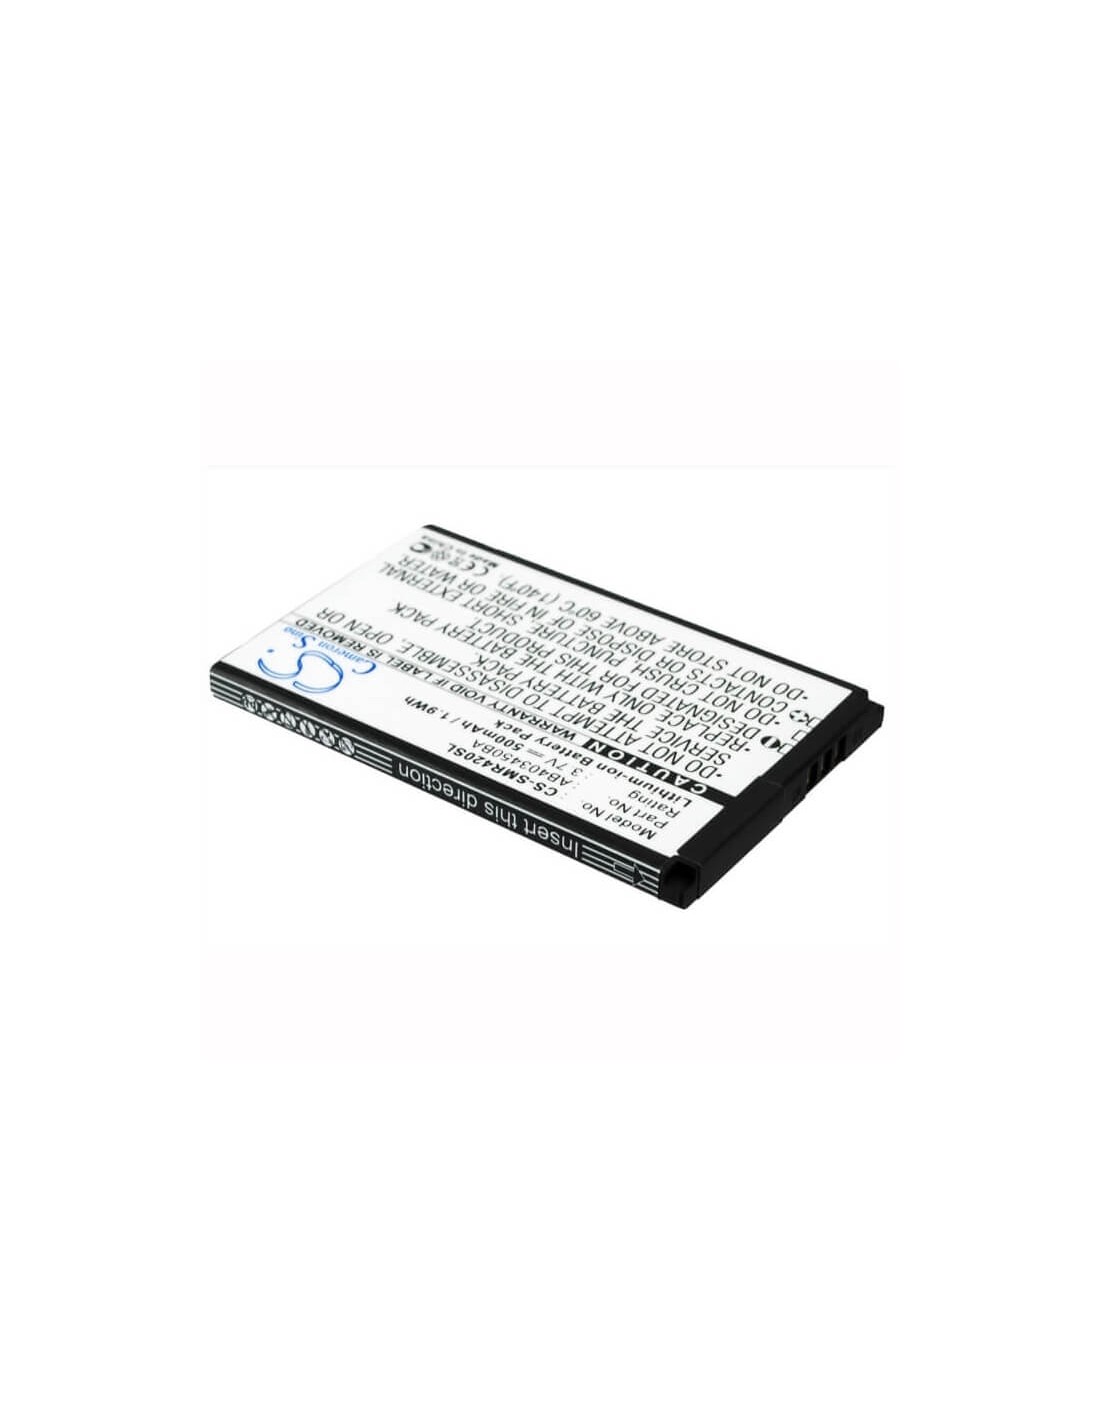 Battery for Samsung SCH-R200, SCH-R410, Tint R420 3.7V, 500mAh - 1.85Wh